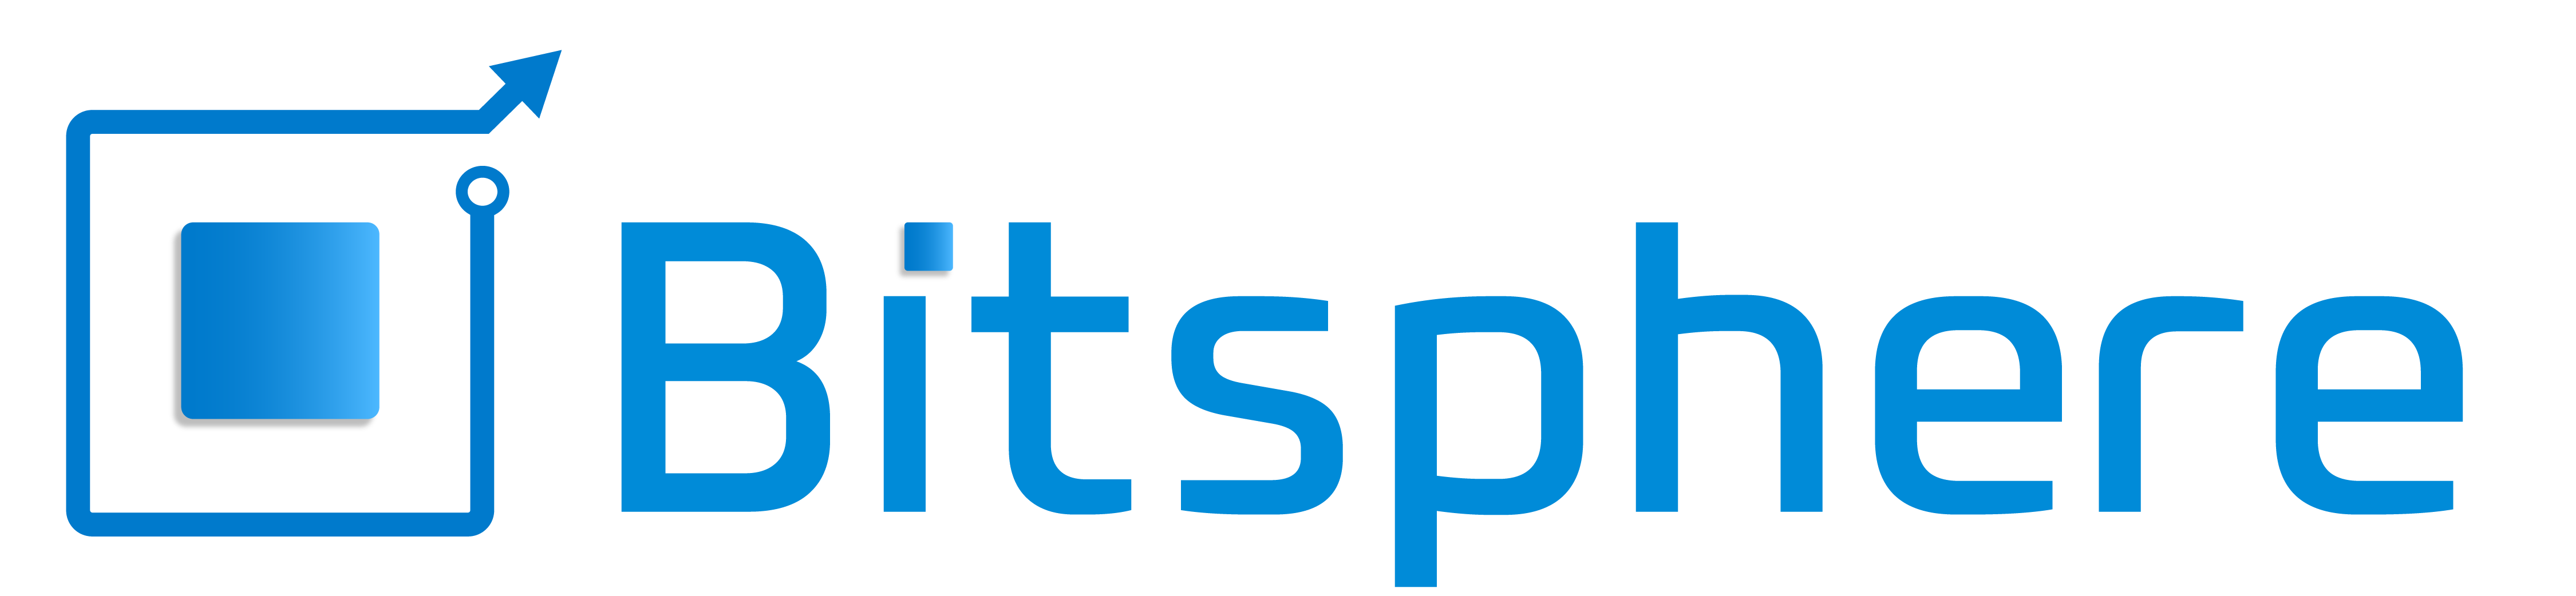 Bitsphere Logo